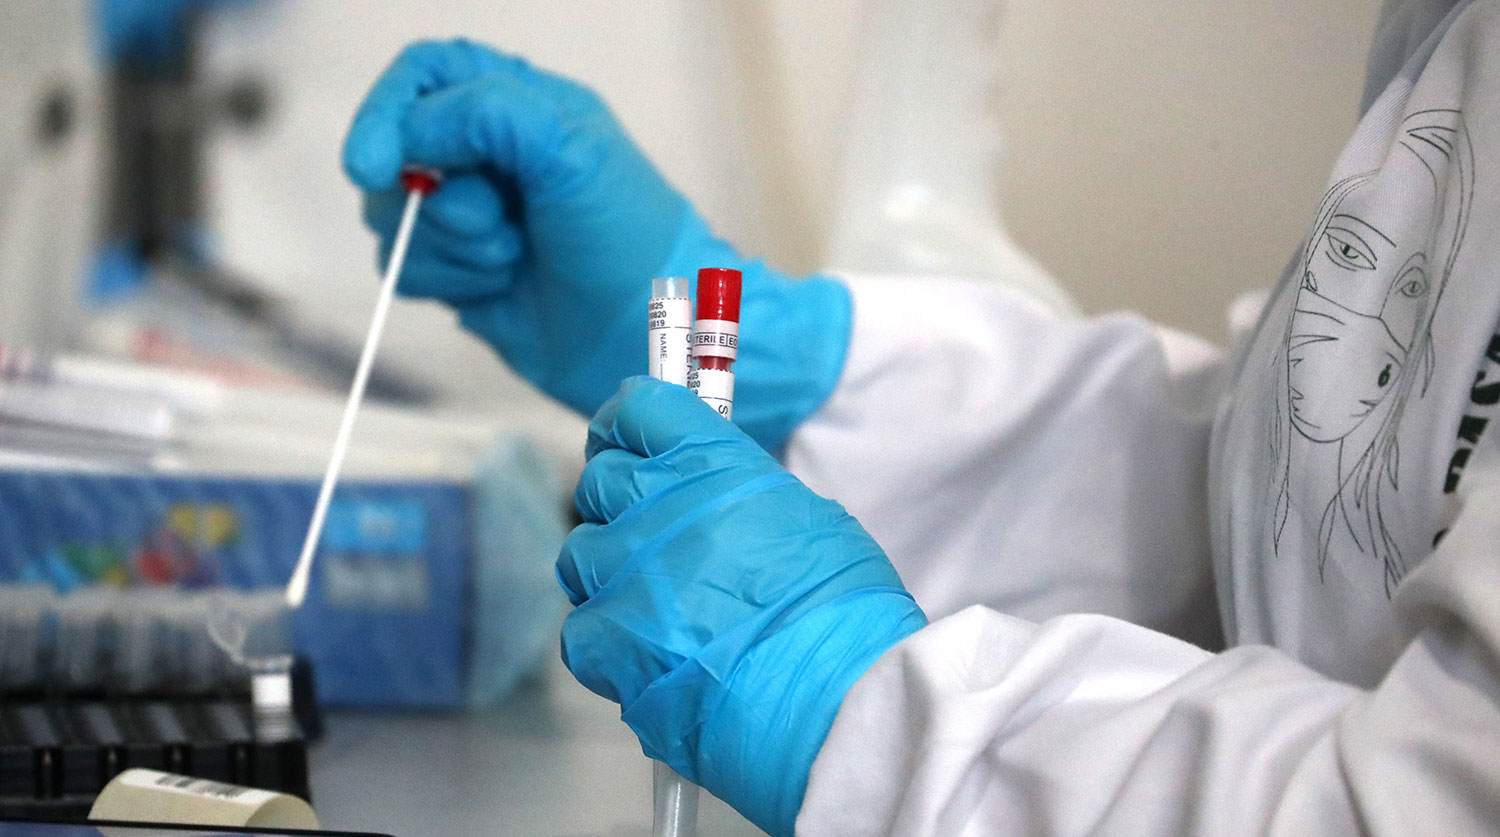 В Узбекистане за последние сутки коронавирус обнаружен у 118 человек